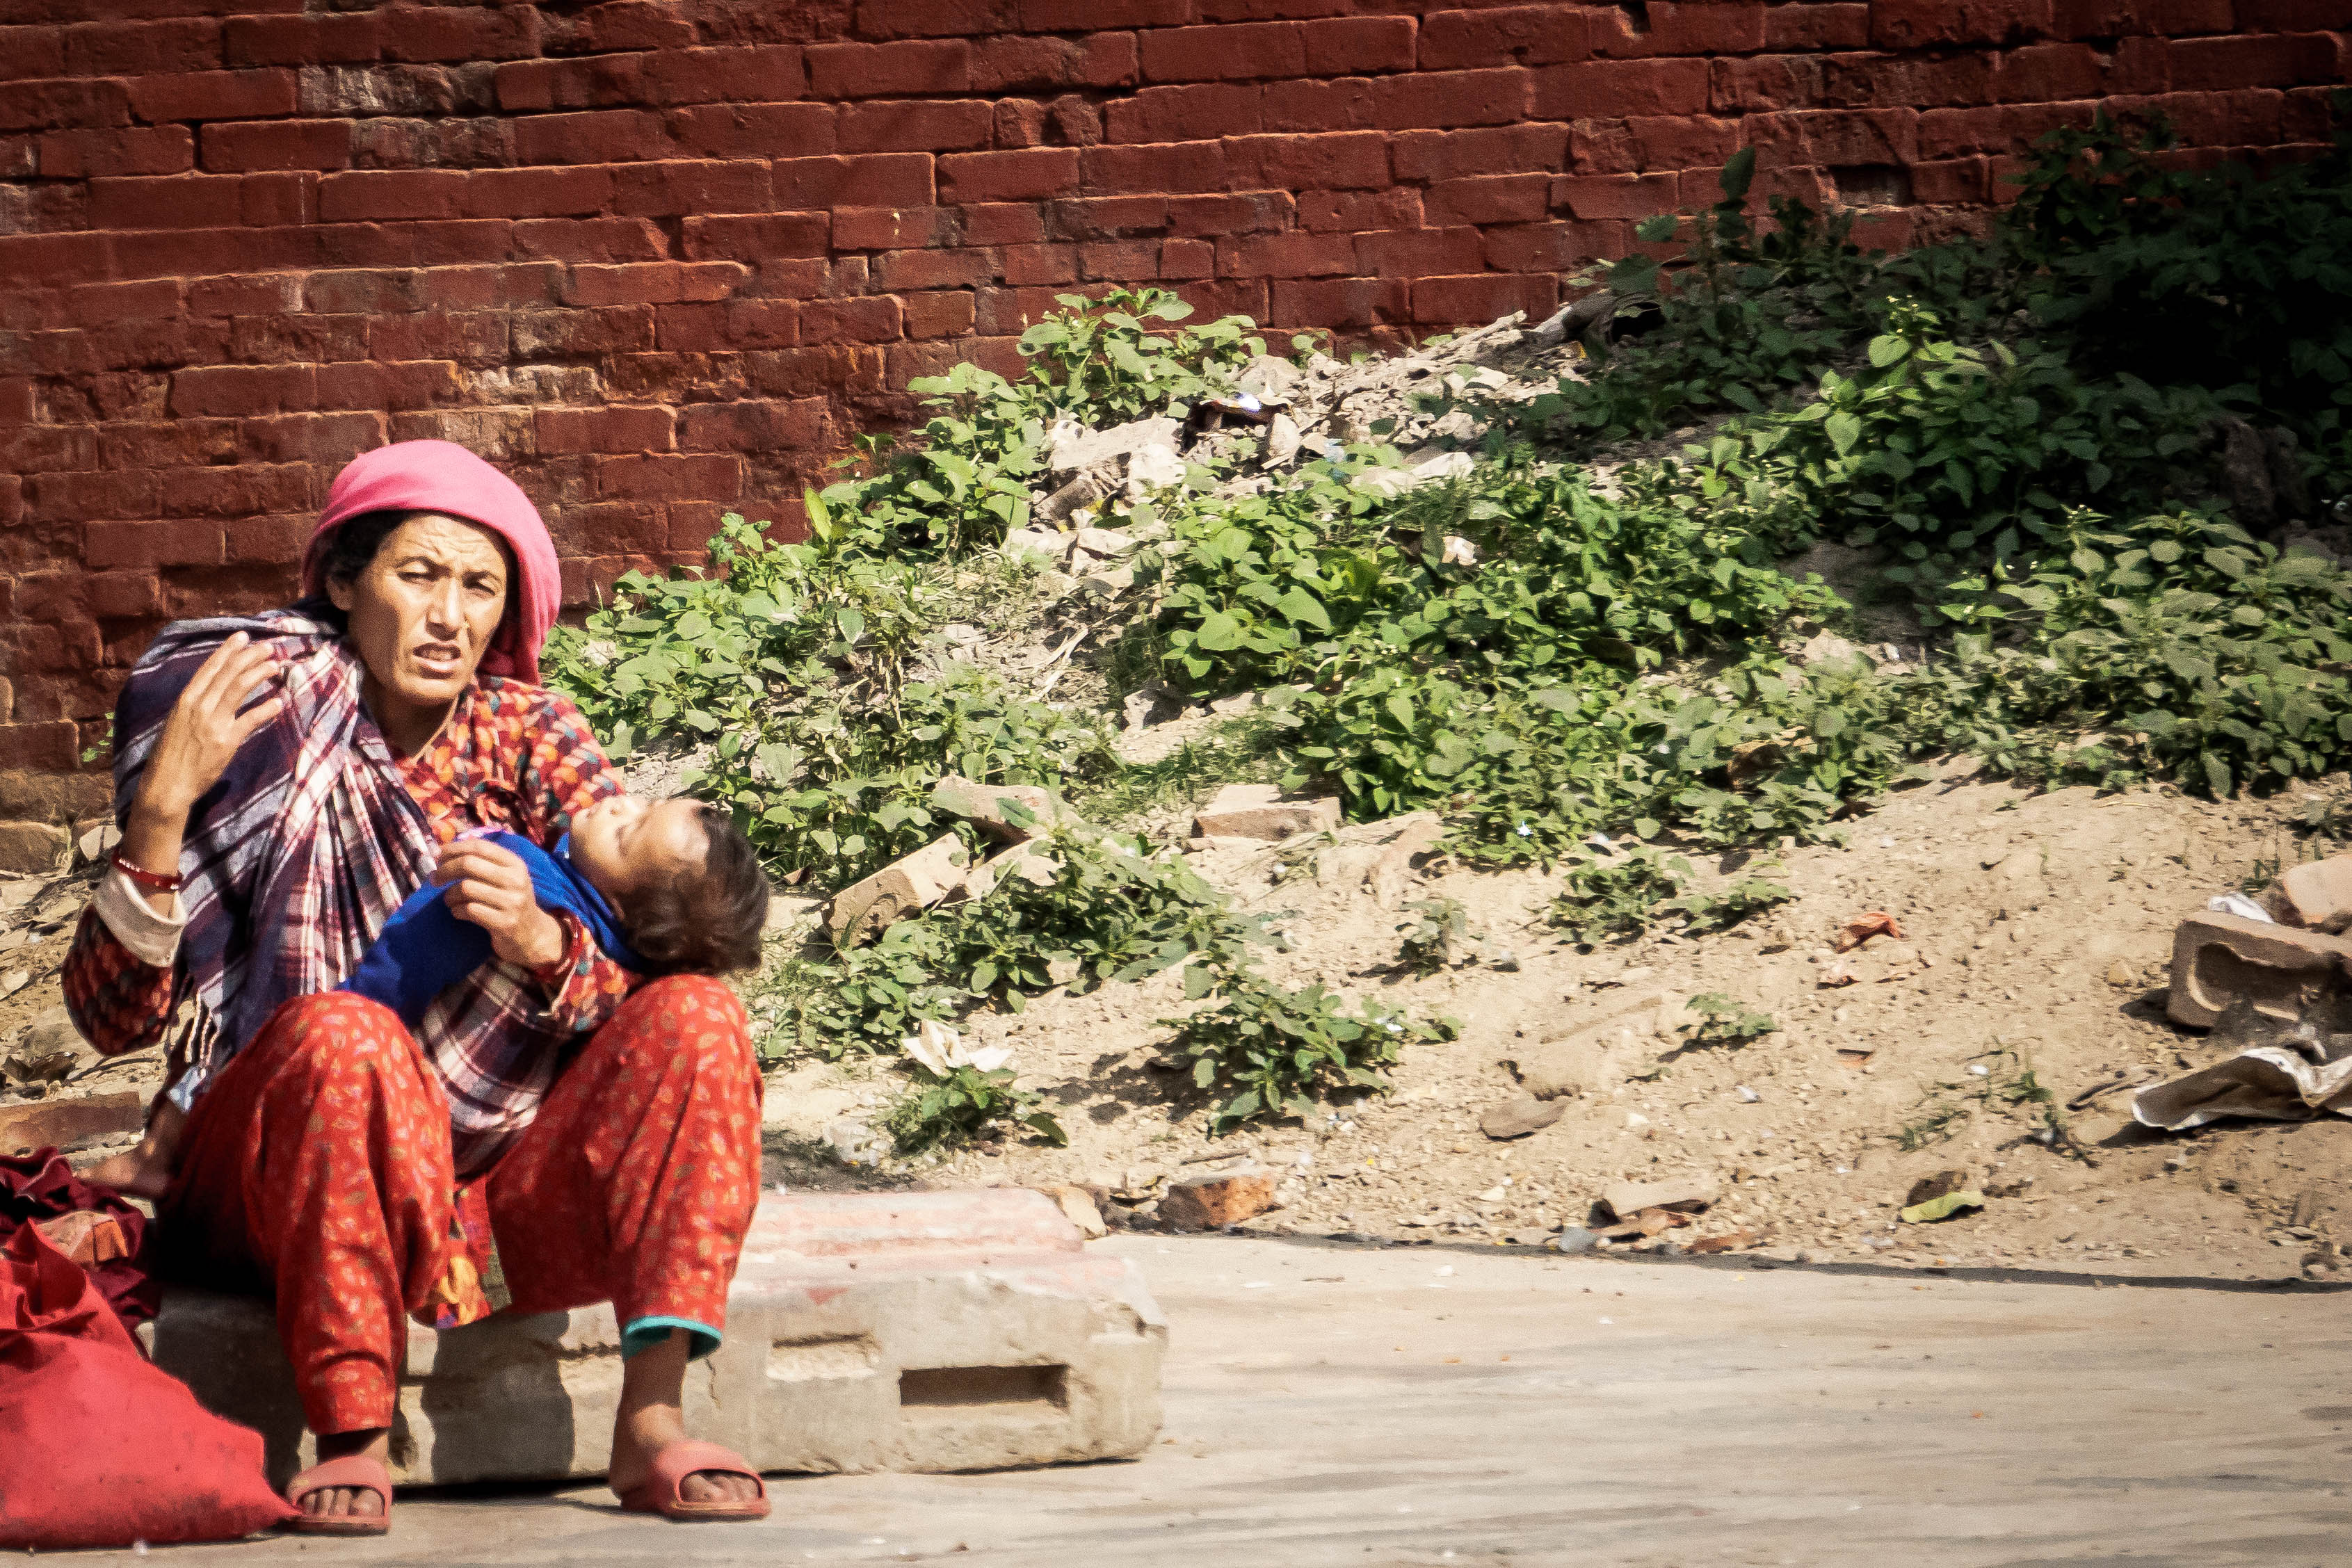 Woman with Child, Durbar Square, Kathmandu